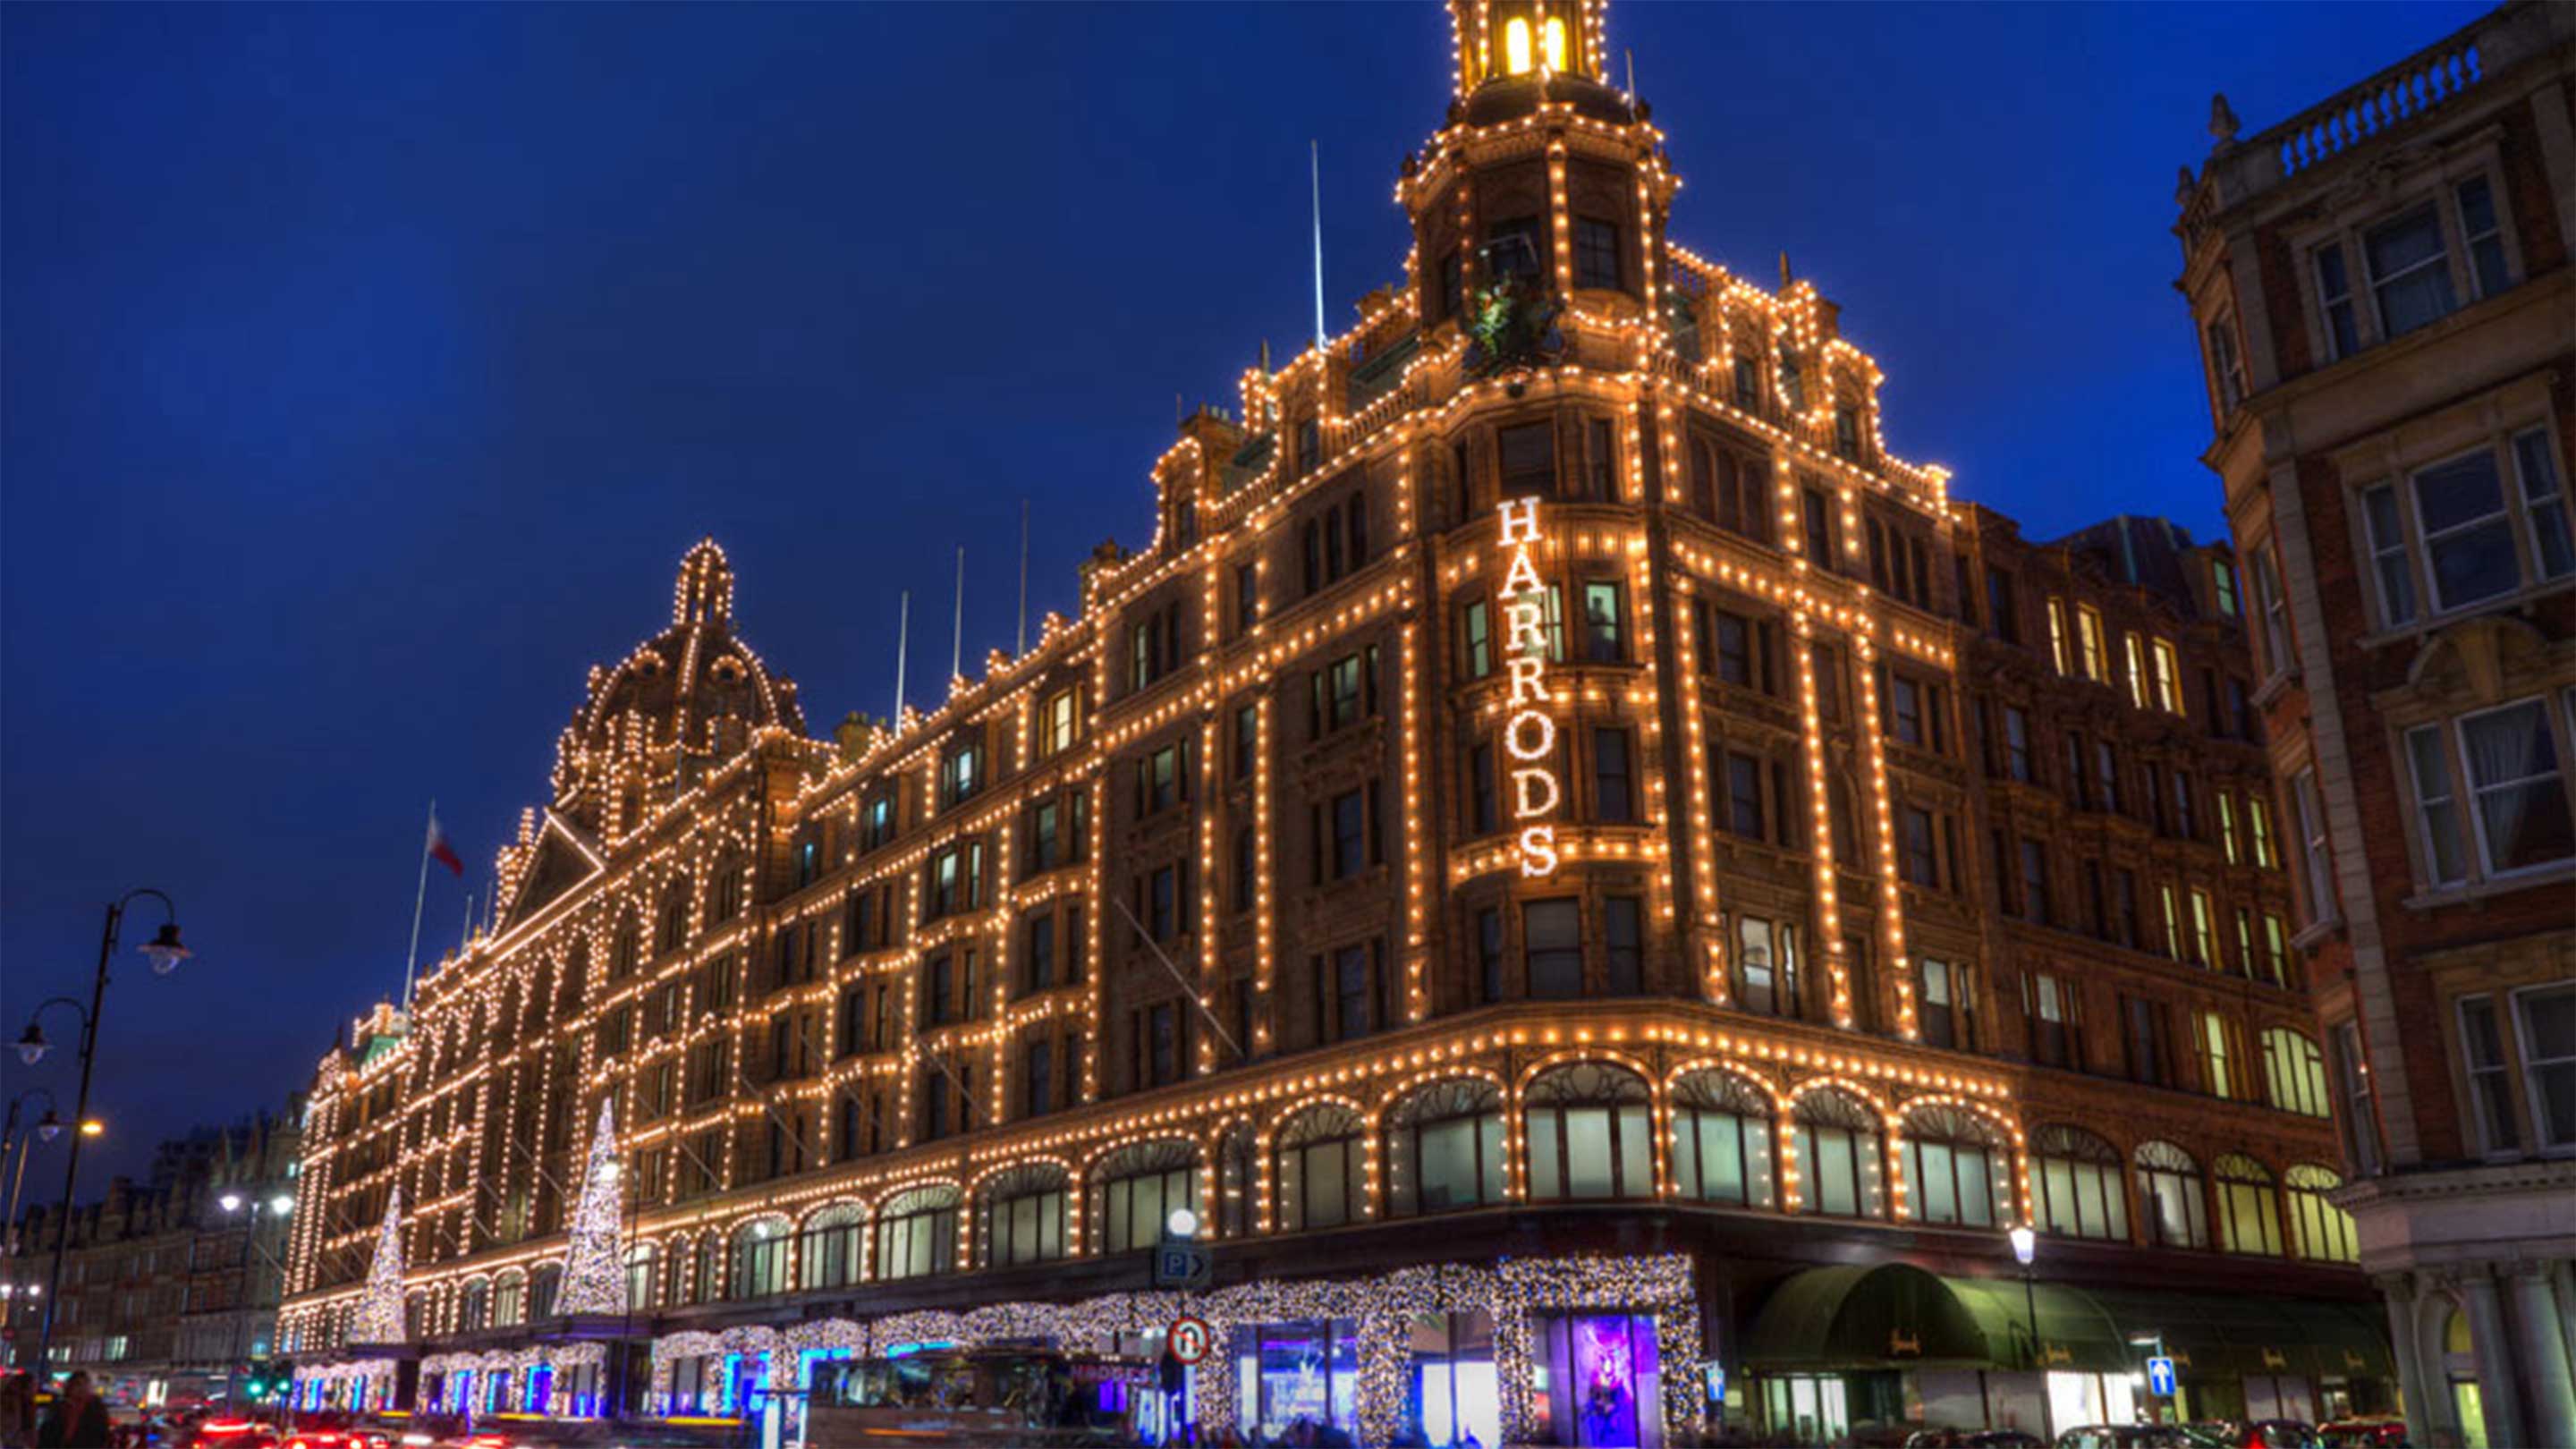 Harrods UK, The World's Leading Luxury Department Store